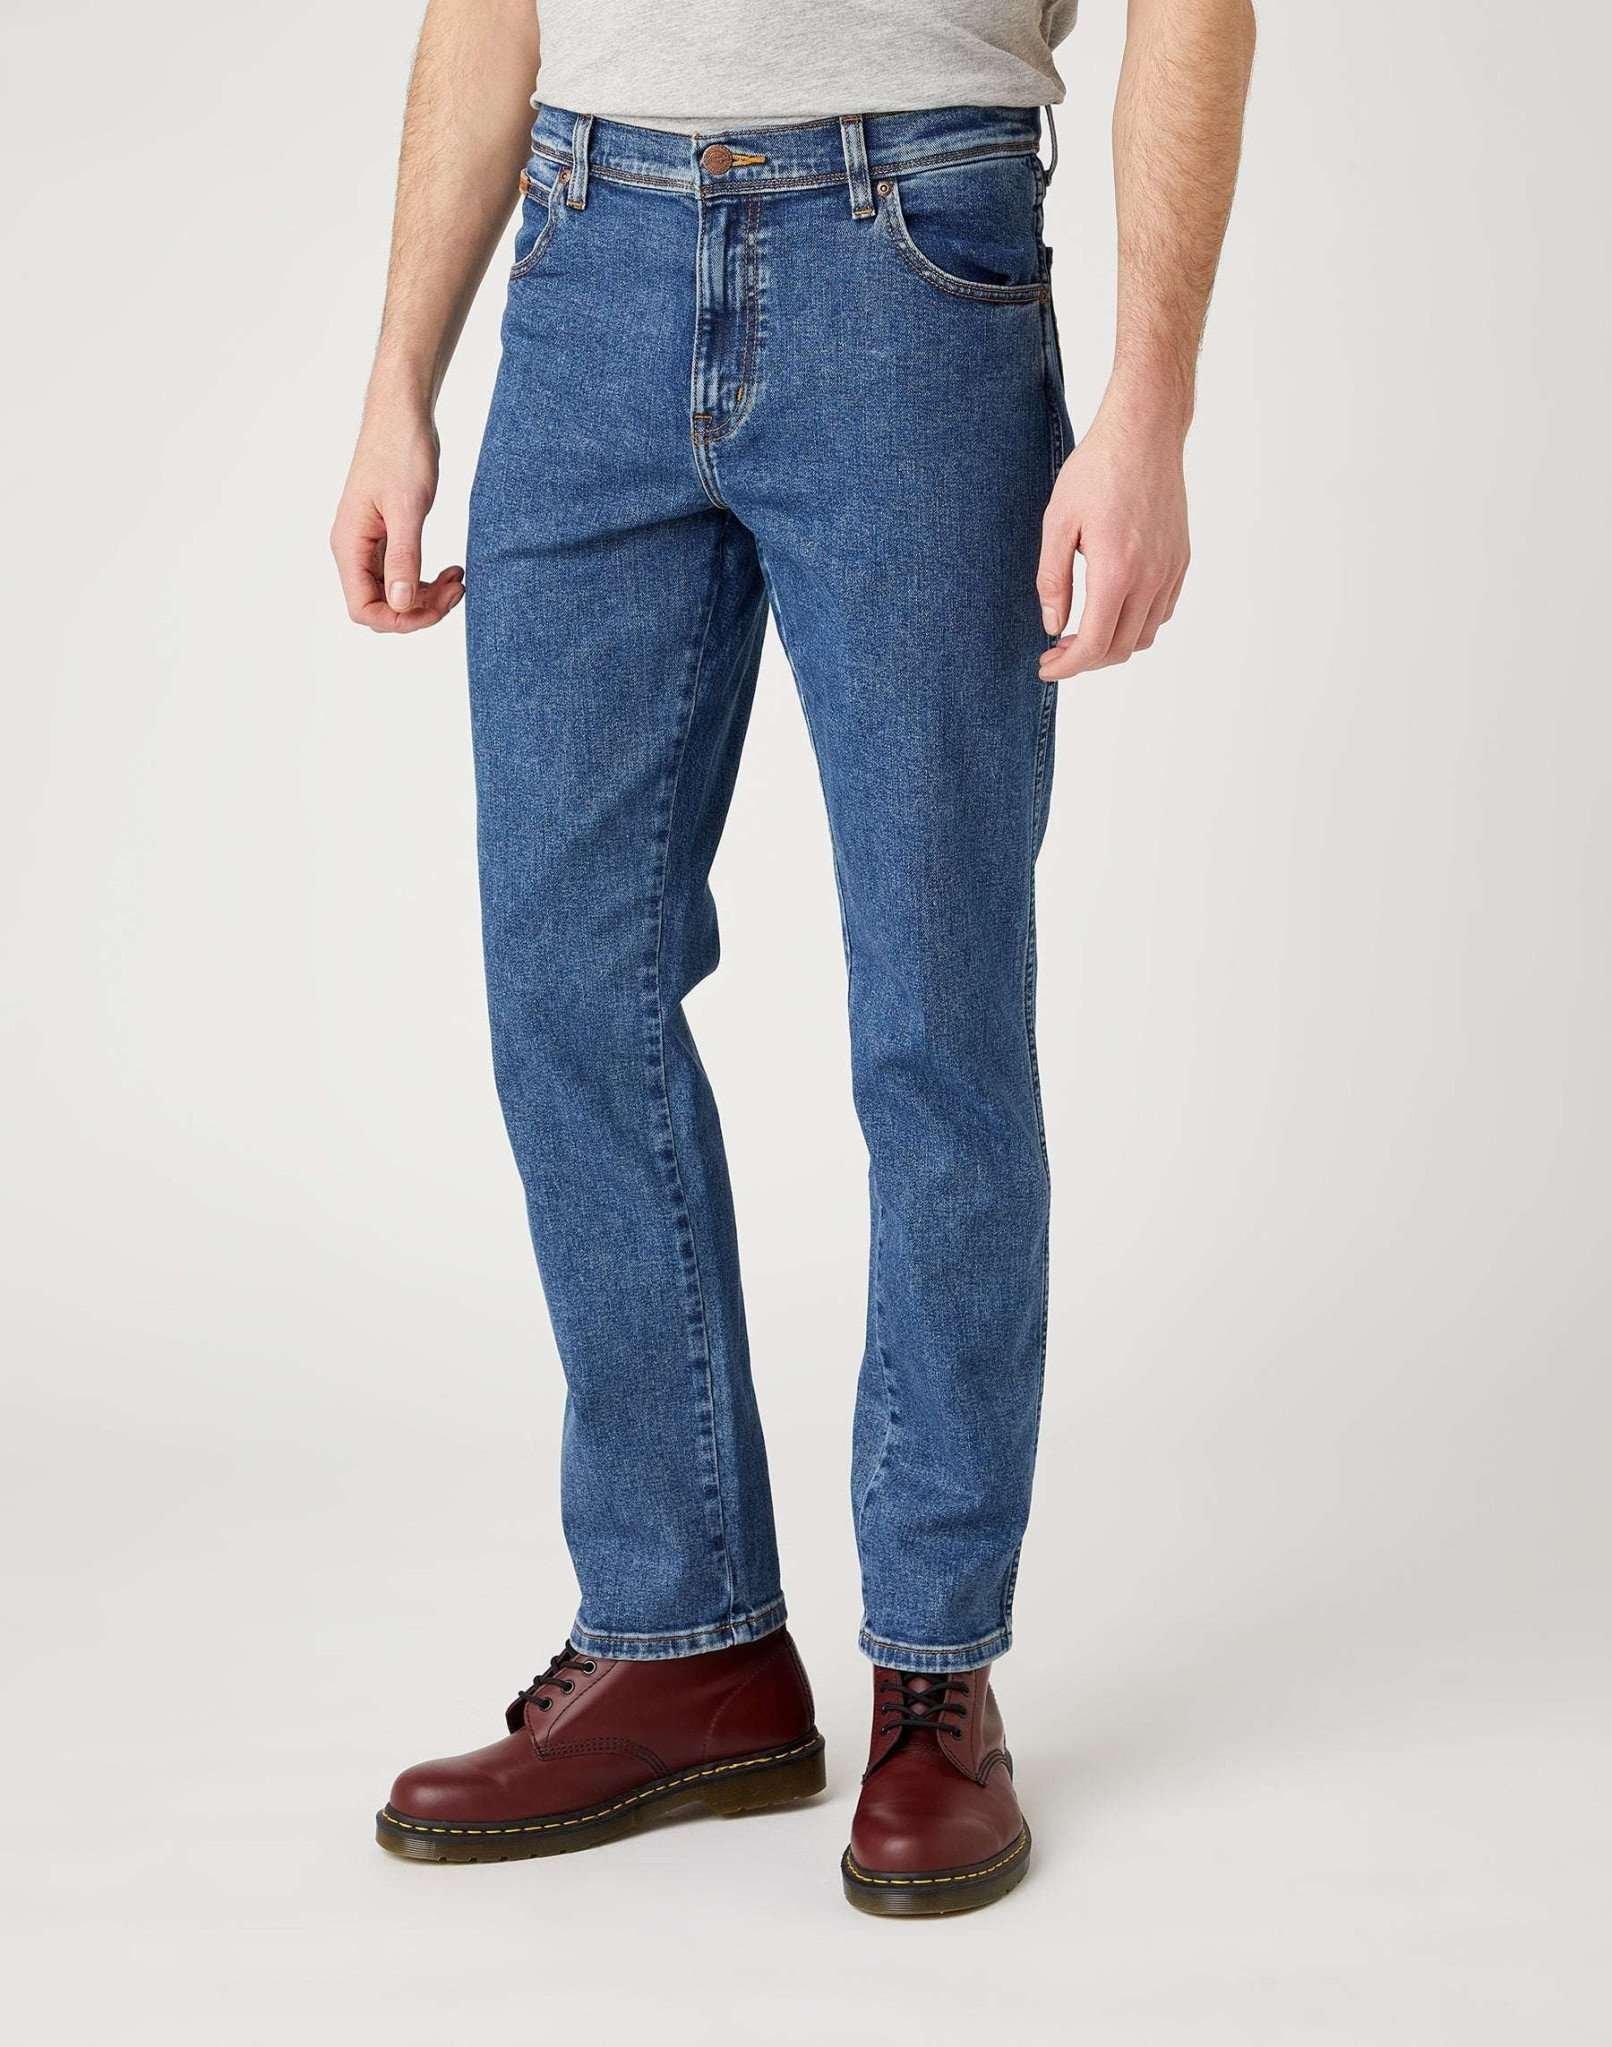 Jeans Straight Leg Texas Slim Herren Blau Denim L32/W38 von Wrangler